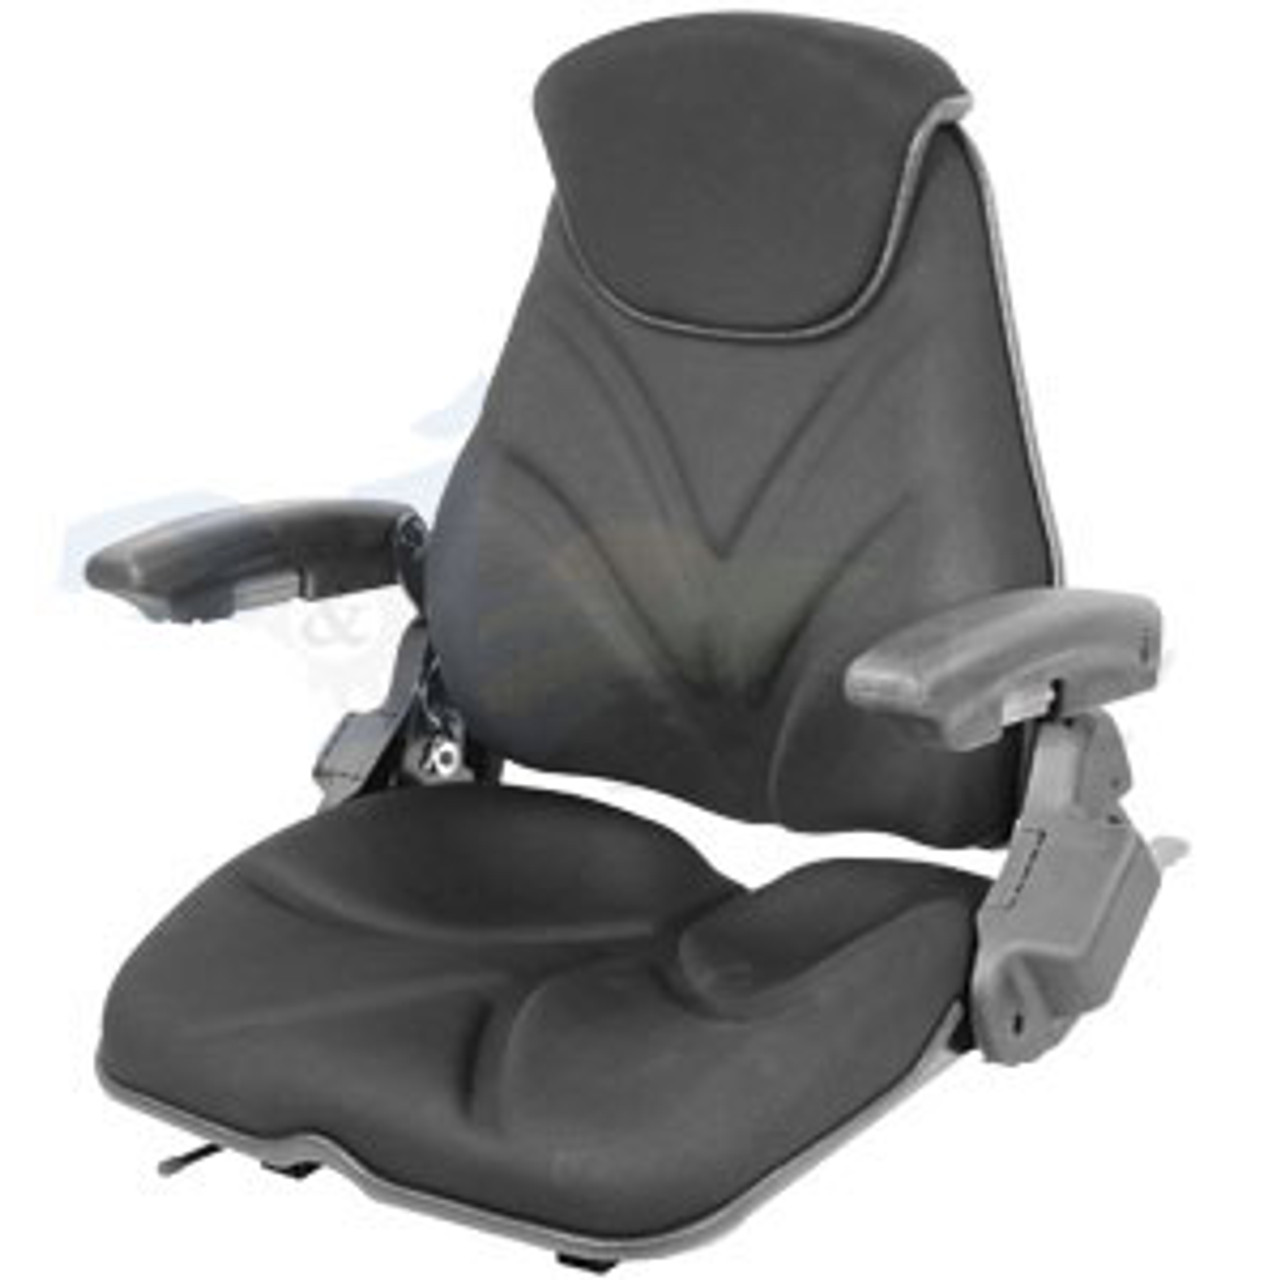 Snapper Riding Mower Seat A-F20ST145  F20 Series, Slide Track / Arm Rest / Head Rest / Black Cloth